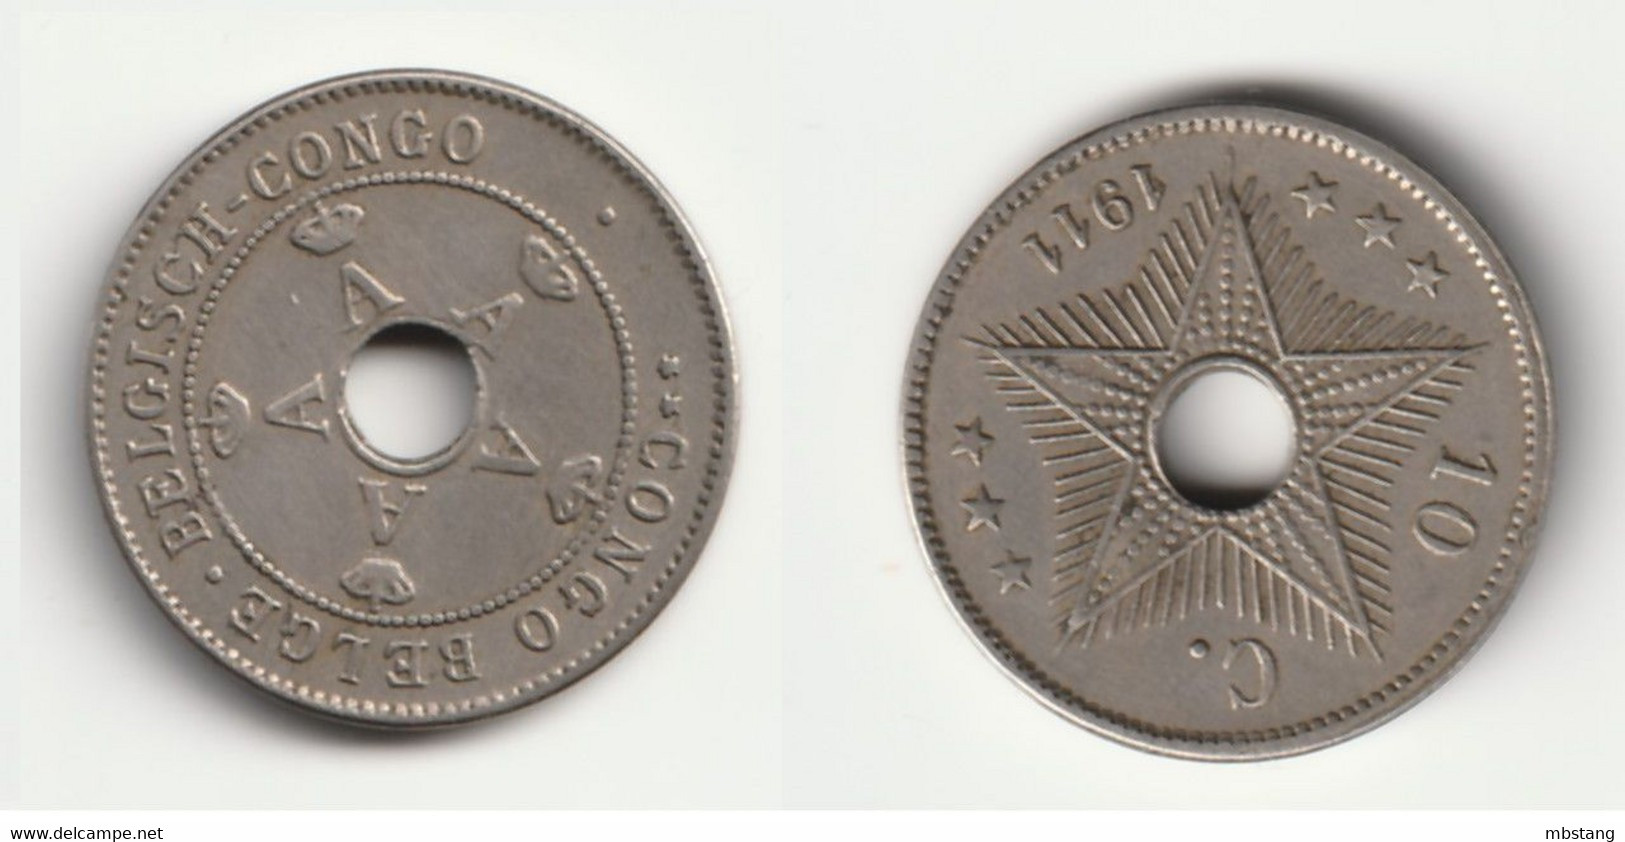 CONGO BELGA  1911 10 CENTIMES   Copper-nickel • 4.0 G • ⌀ 22 Mm KM# 18 - 1910-1934: Albert I